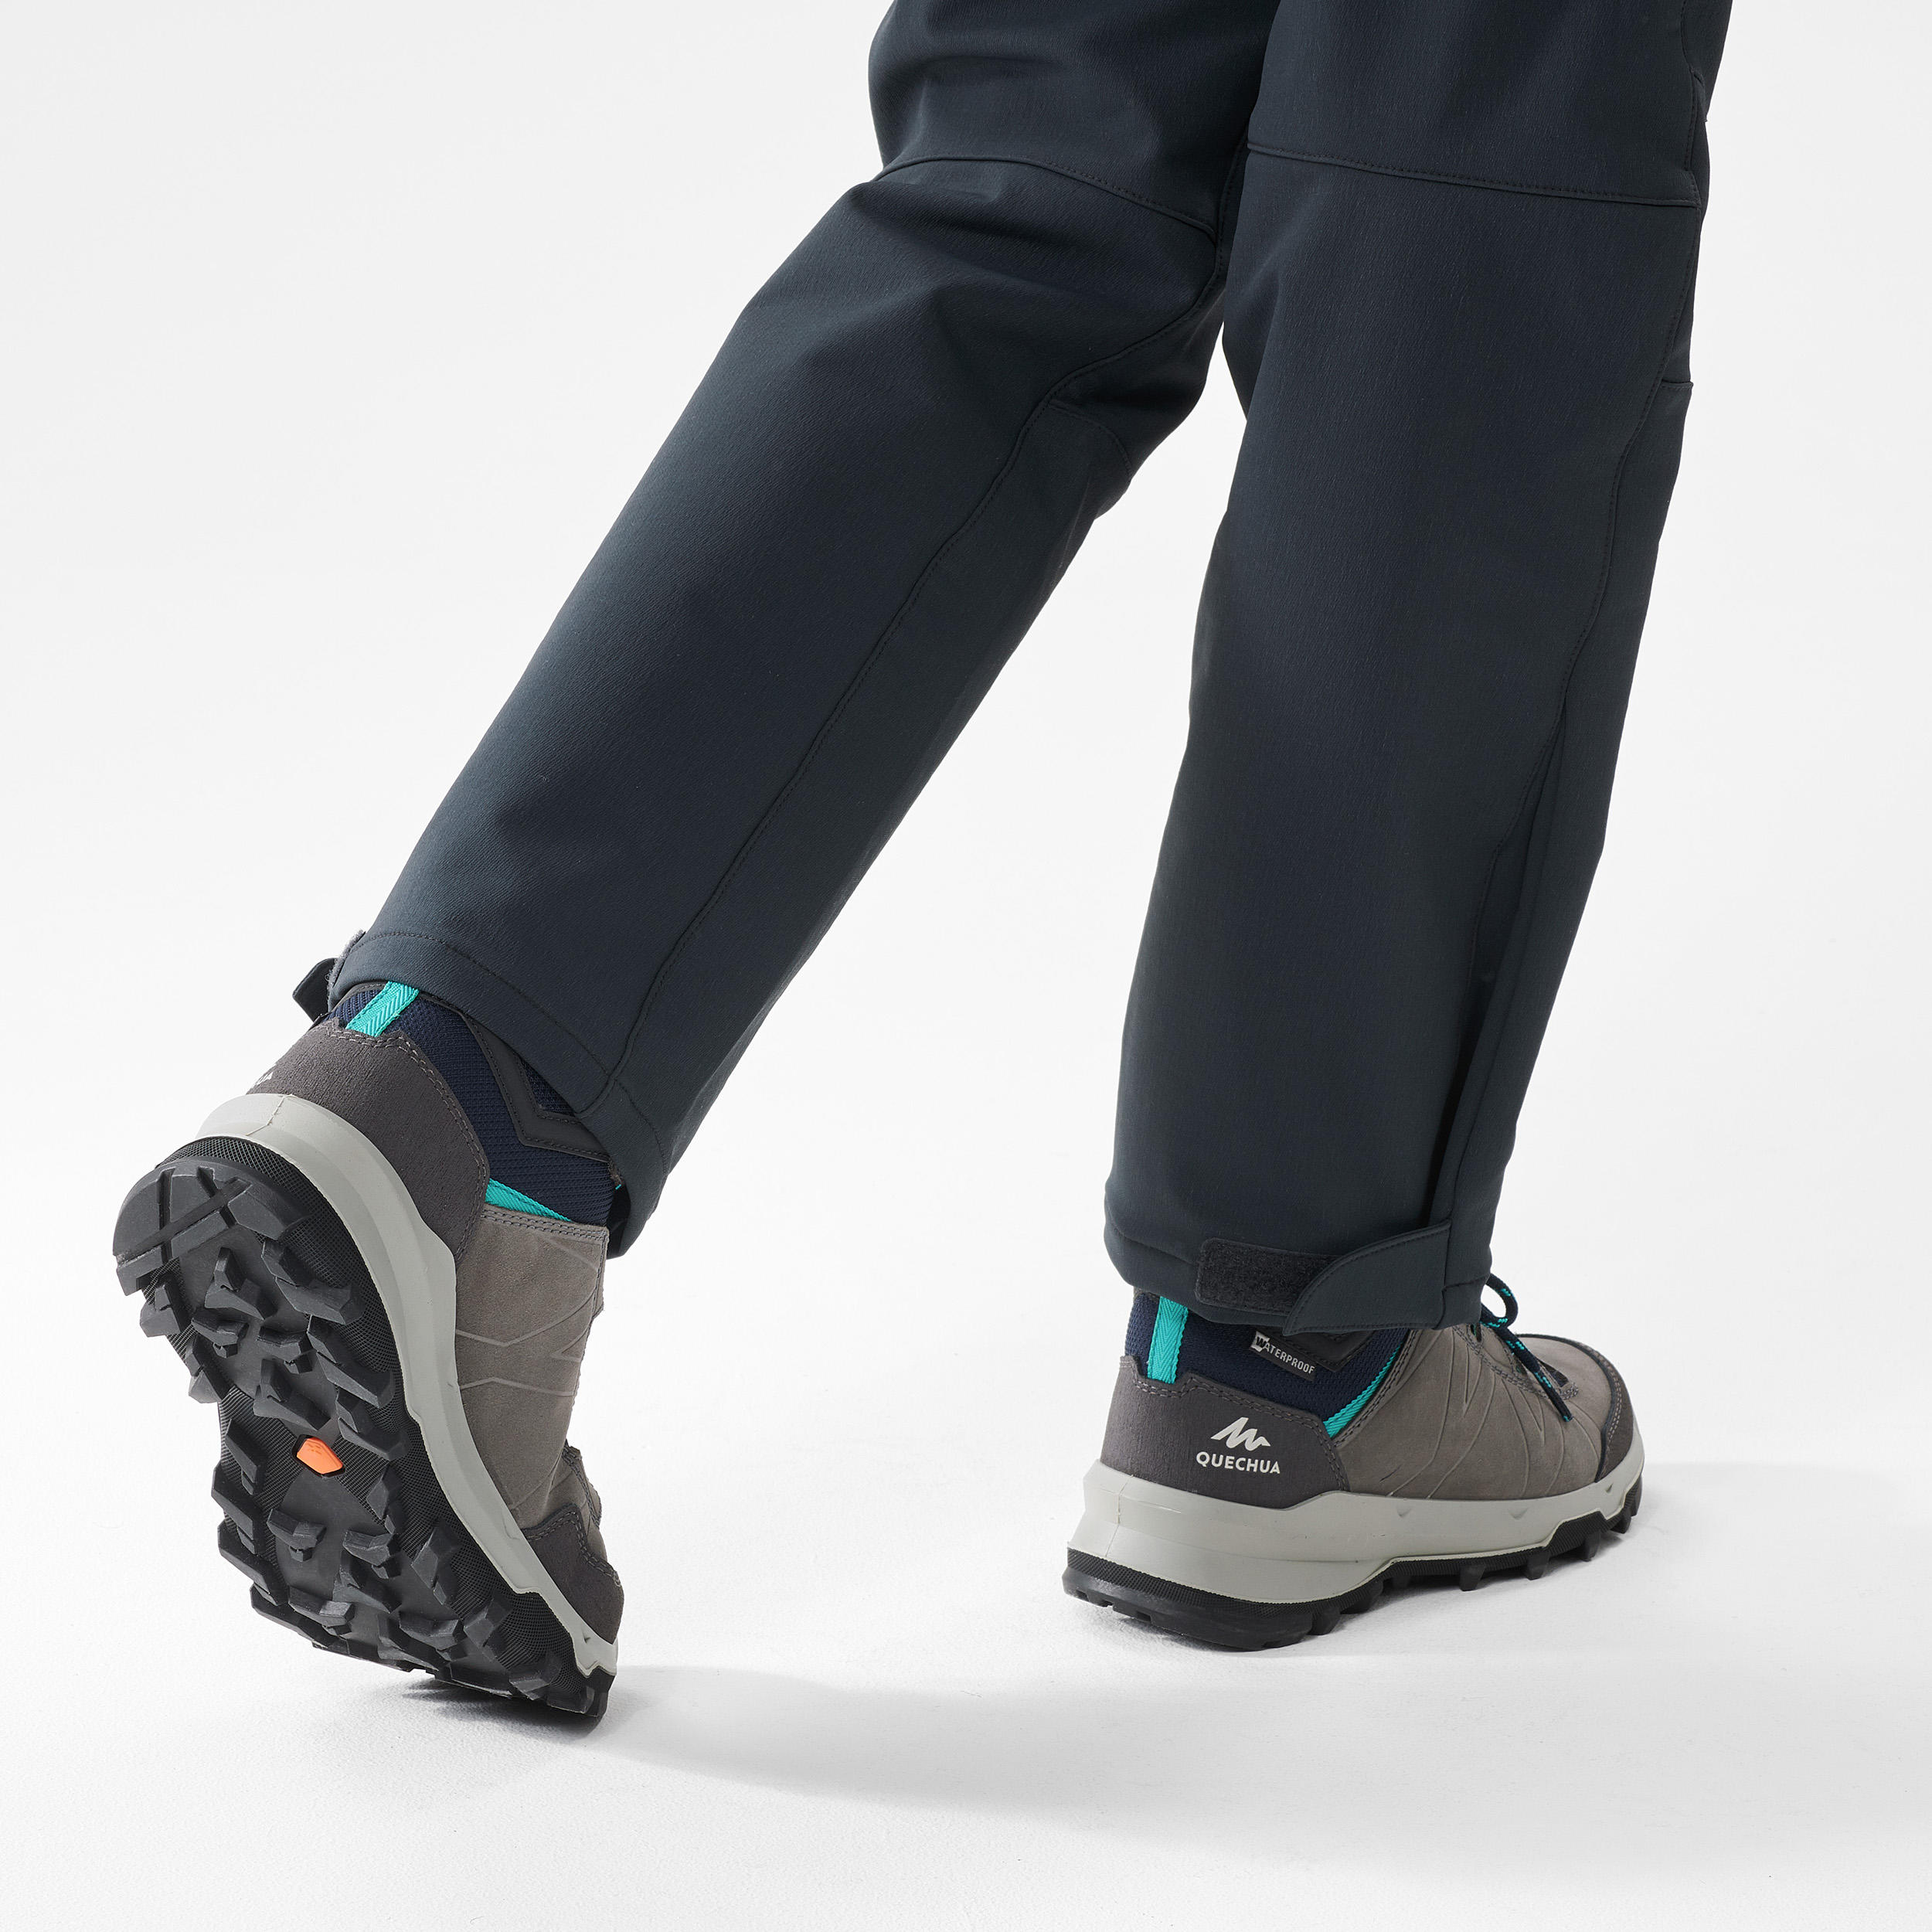 Kids’ Waterproof Mountain Walking Boots - MH500 Sizes 10-6 5/6